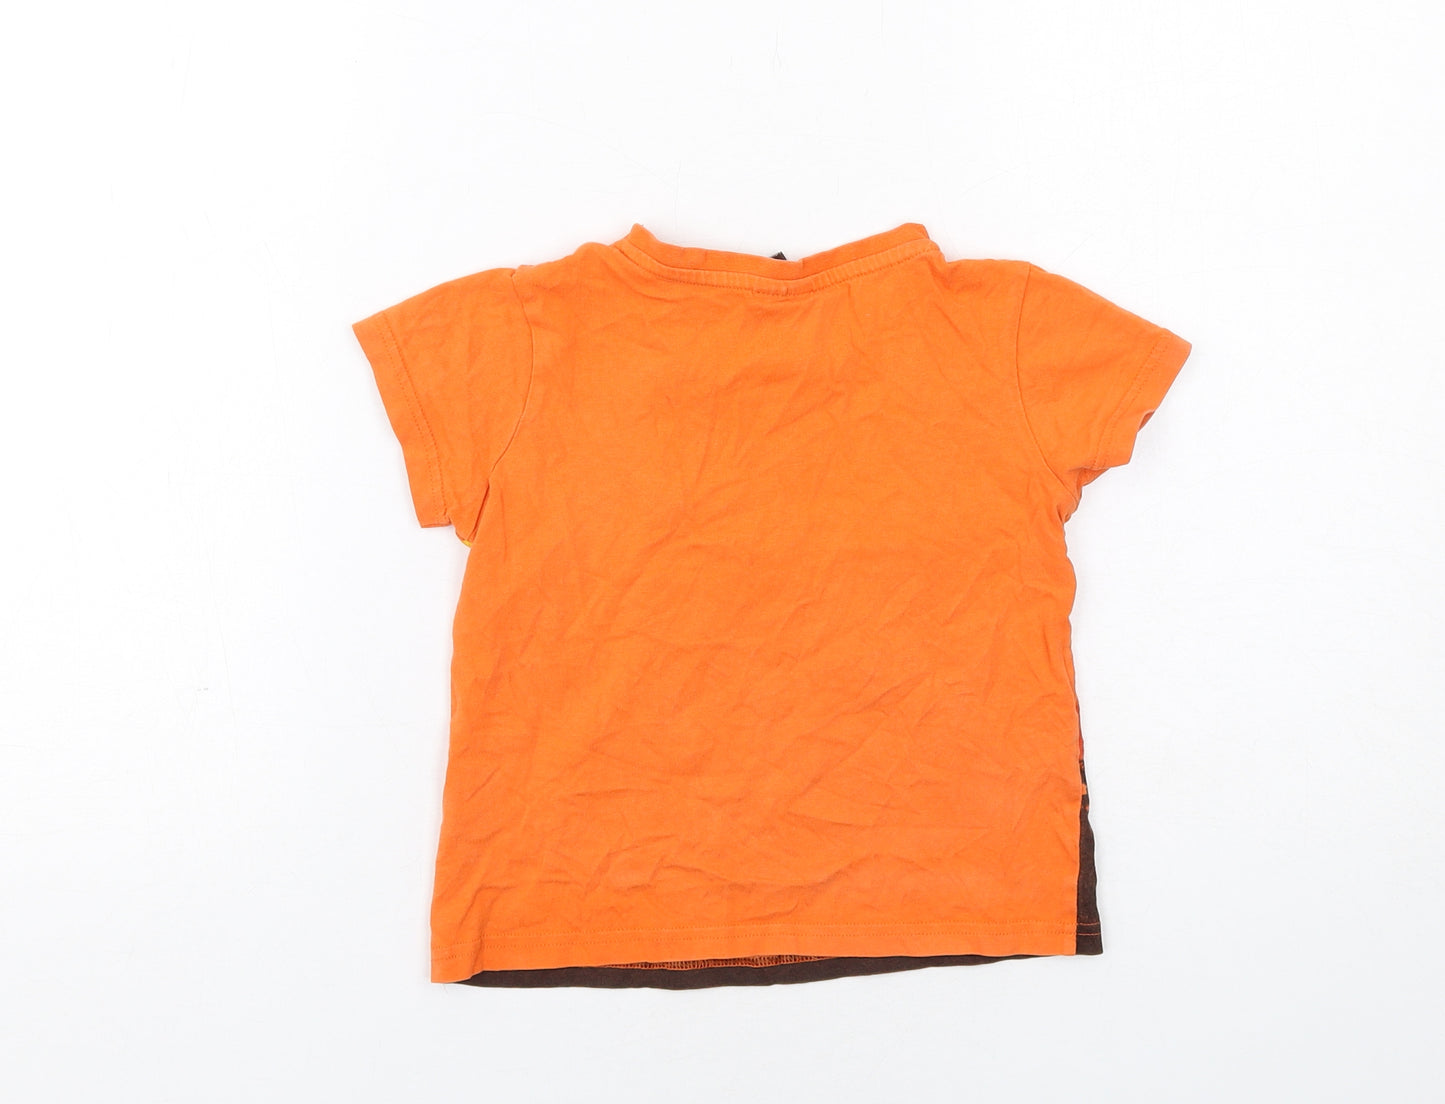 Jurassic World Boys Orange Cotton Basic T-Shirt Size 4-5 Years Round Neck Pullover - Jurassic World